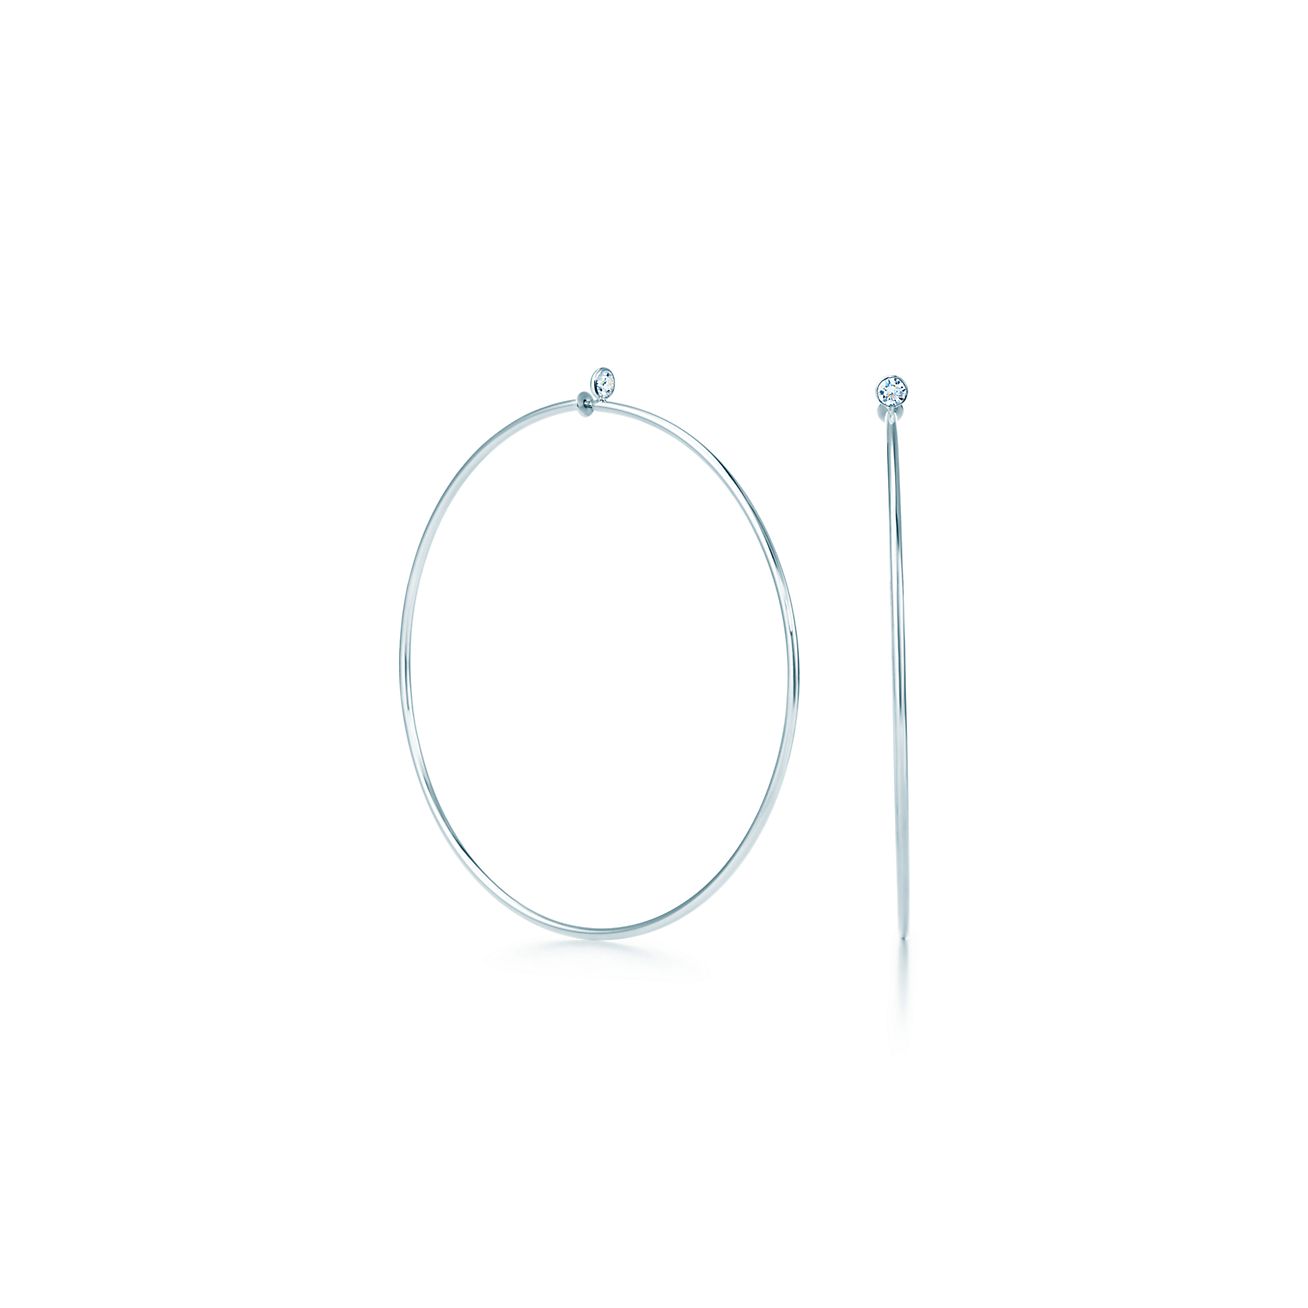 Shop Rubans 925 Silver Modern Minimal Ring Hoop Earrings Online at Rubans